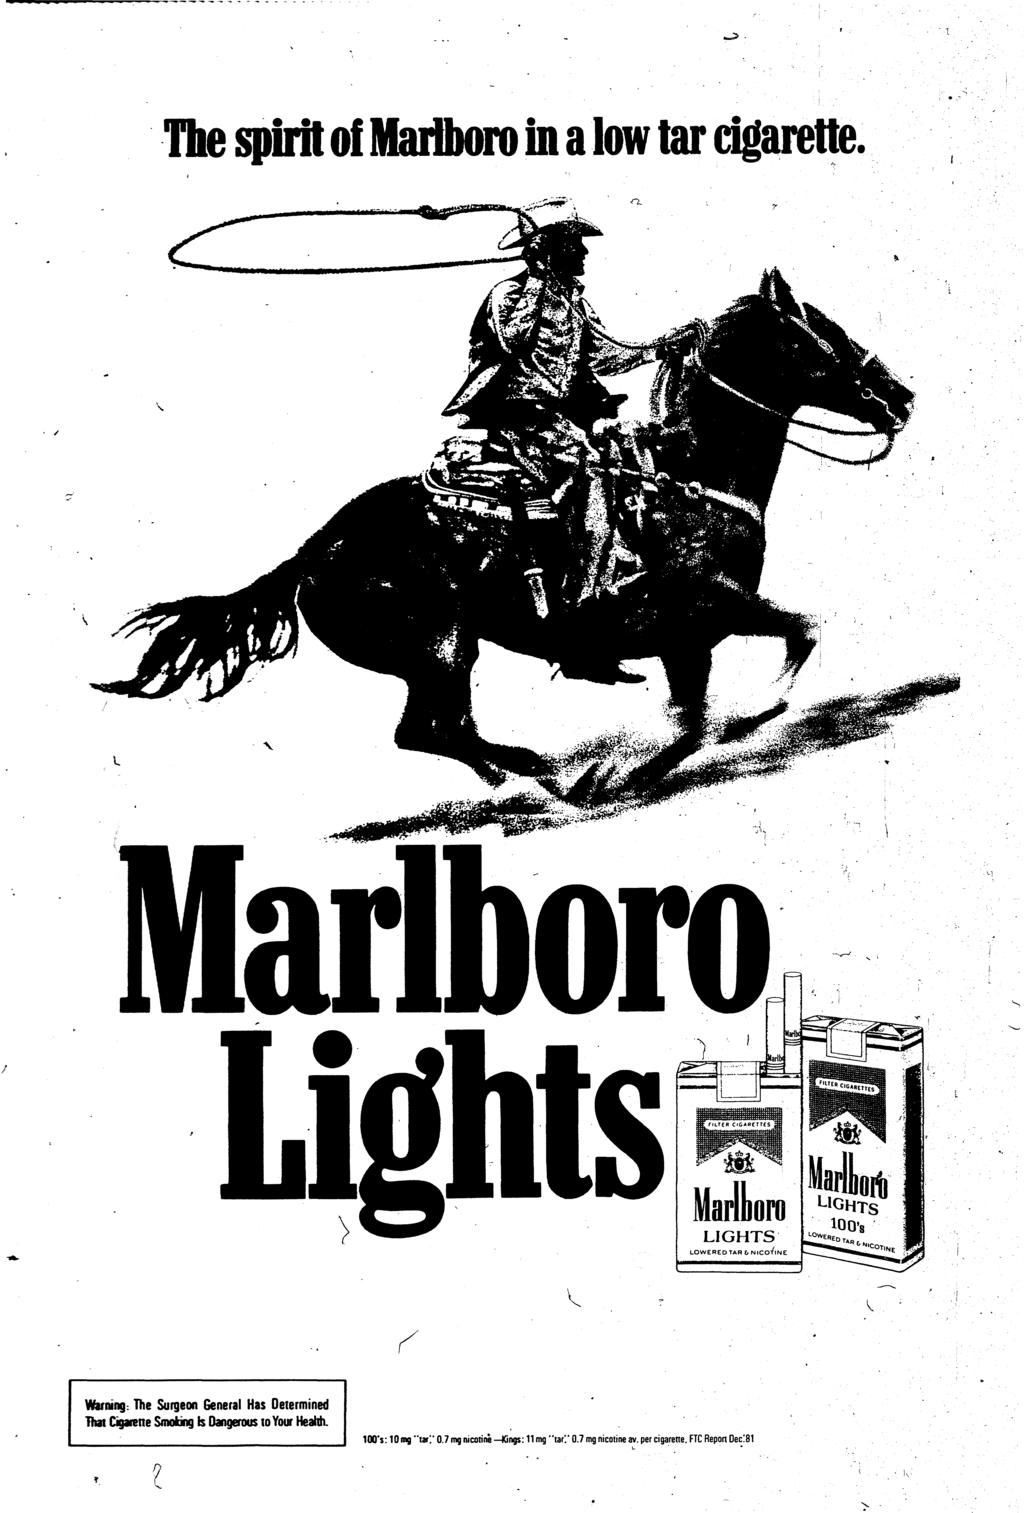 The spirit of Marlboro in a low tar cigarette V!